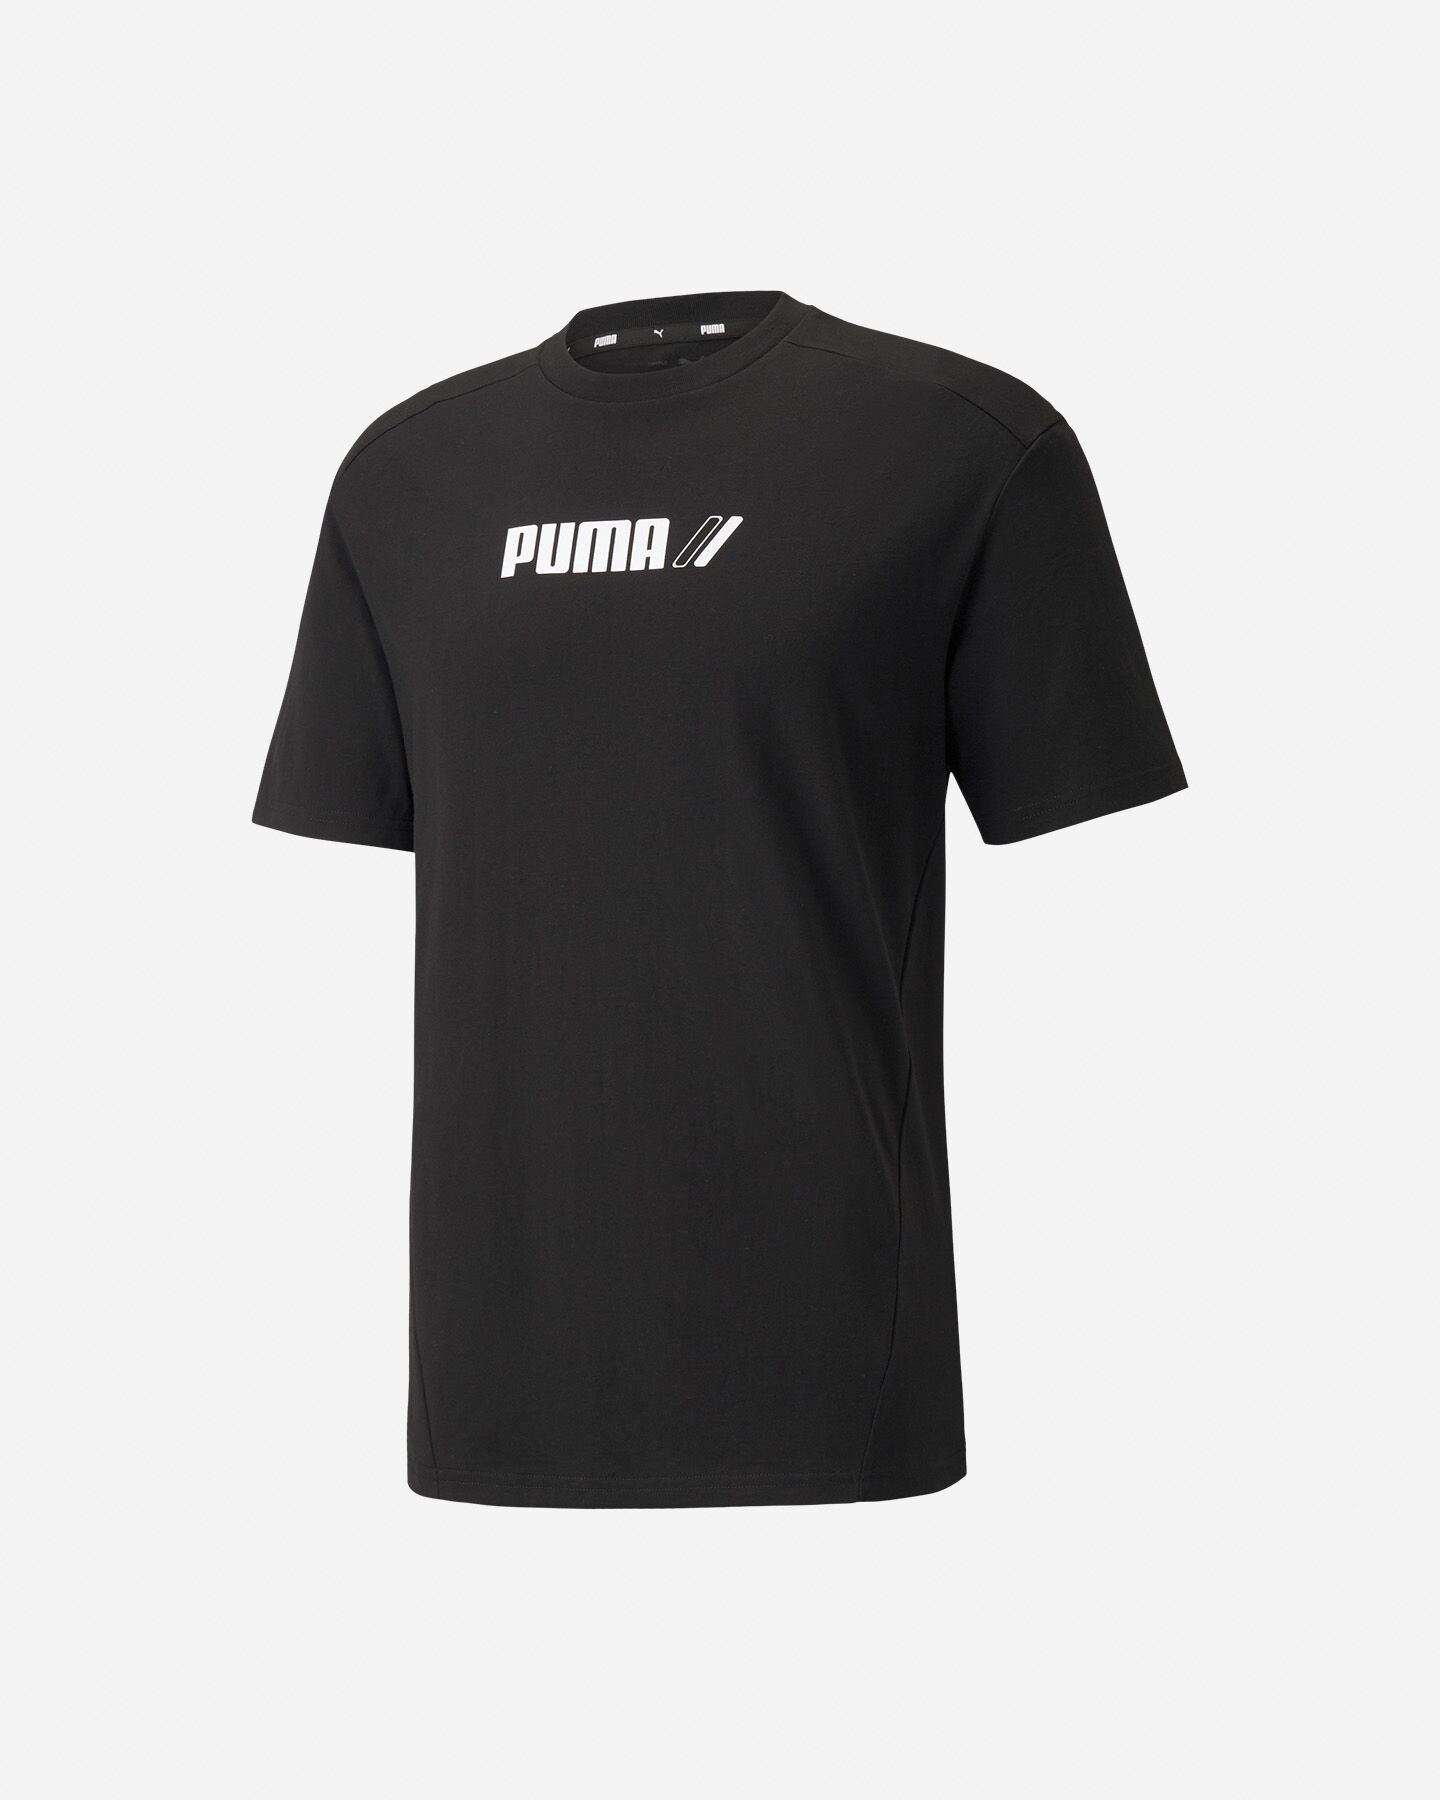  T-Shirt PUMA RADICAL MID LOGO M S5334206|01|XS scatto 0